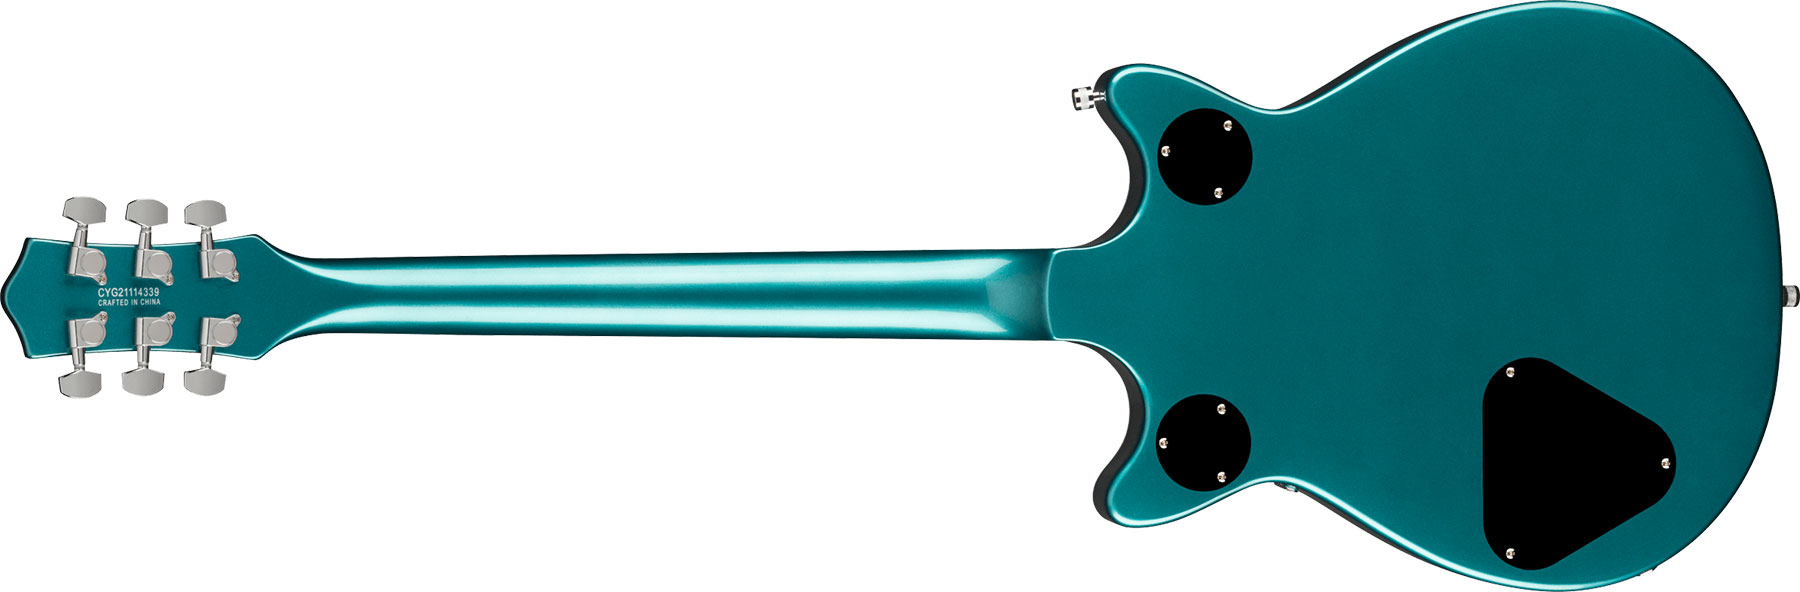 Gretsch G5222 Electromatic Double Jet Bt V-stoptail Hh Ht Lau - Ocean Turquoise - Double cut electric guitar - Variation 1